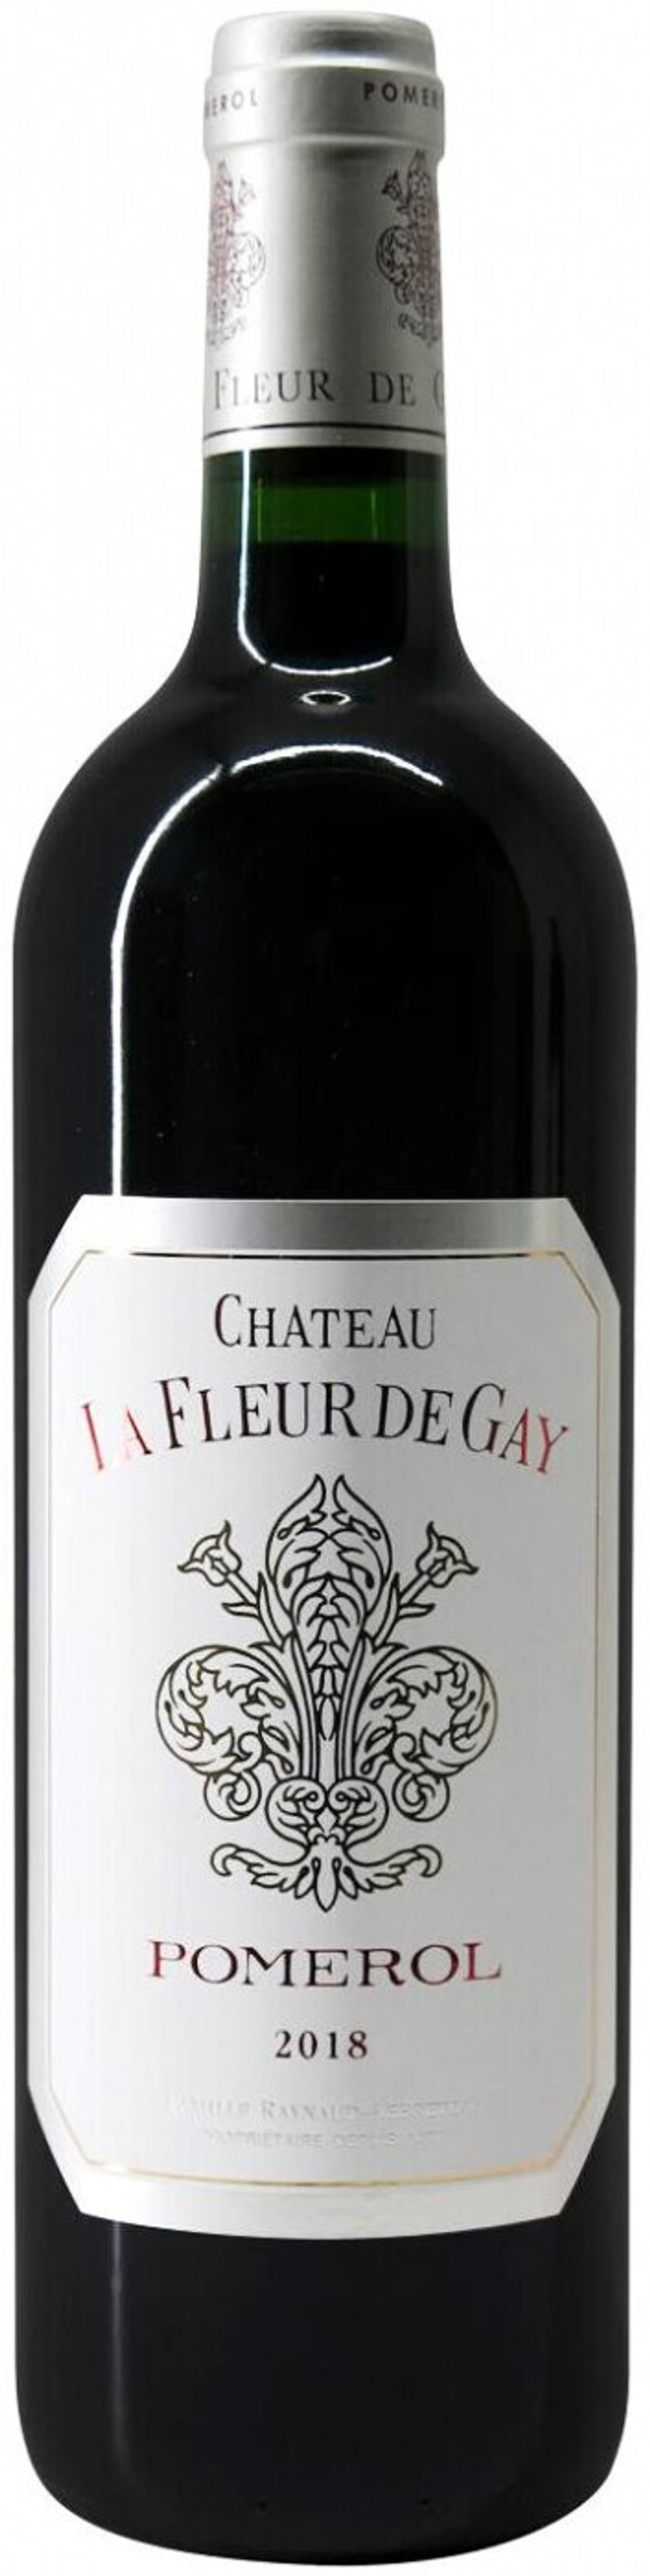 Вино Chateau La Fleur de Gay, 0,75 л.